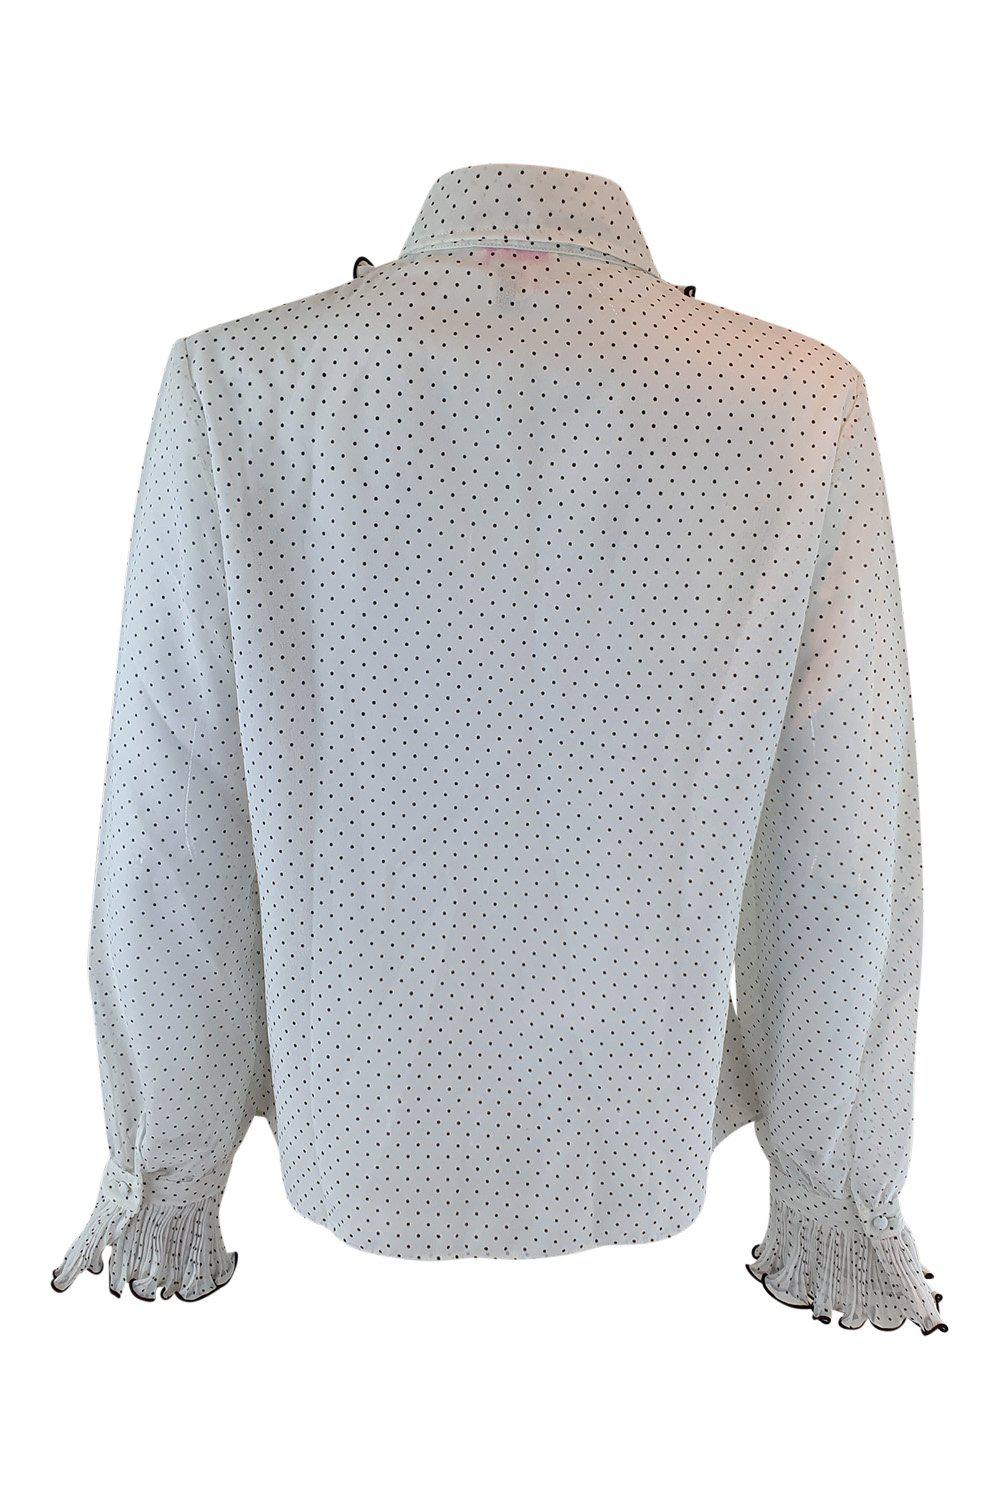 JANET COLTON Vintage White Polyester Polka Dot Ruffled Collar Shirt (40)-The Freperie